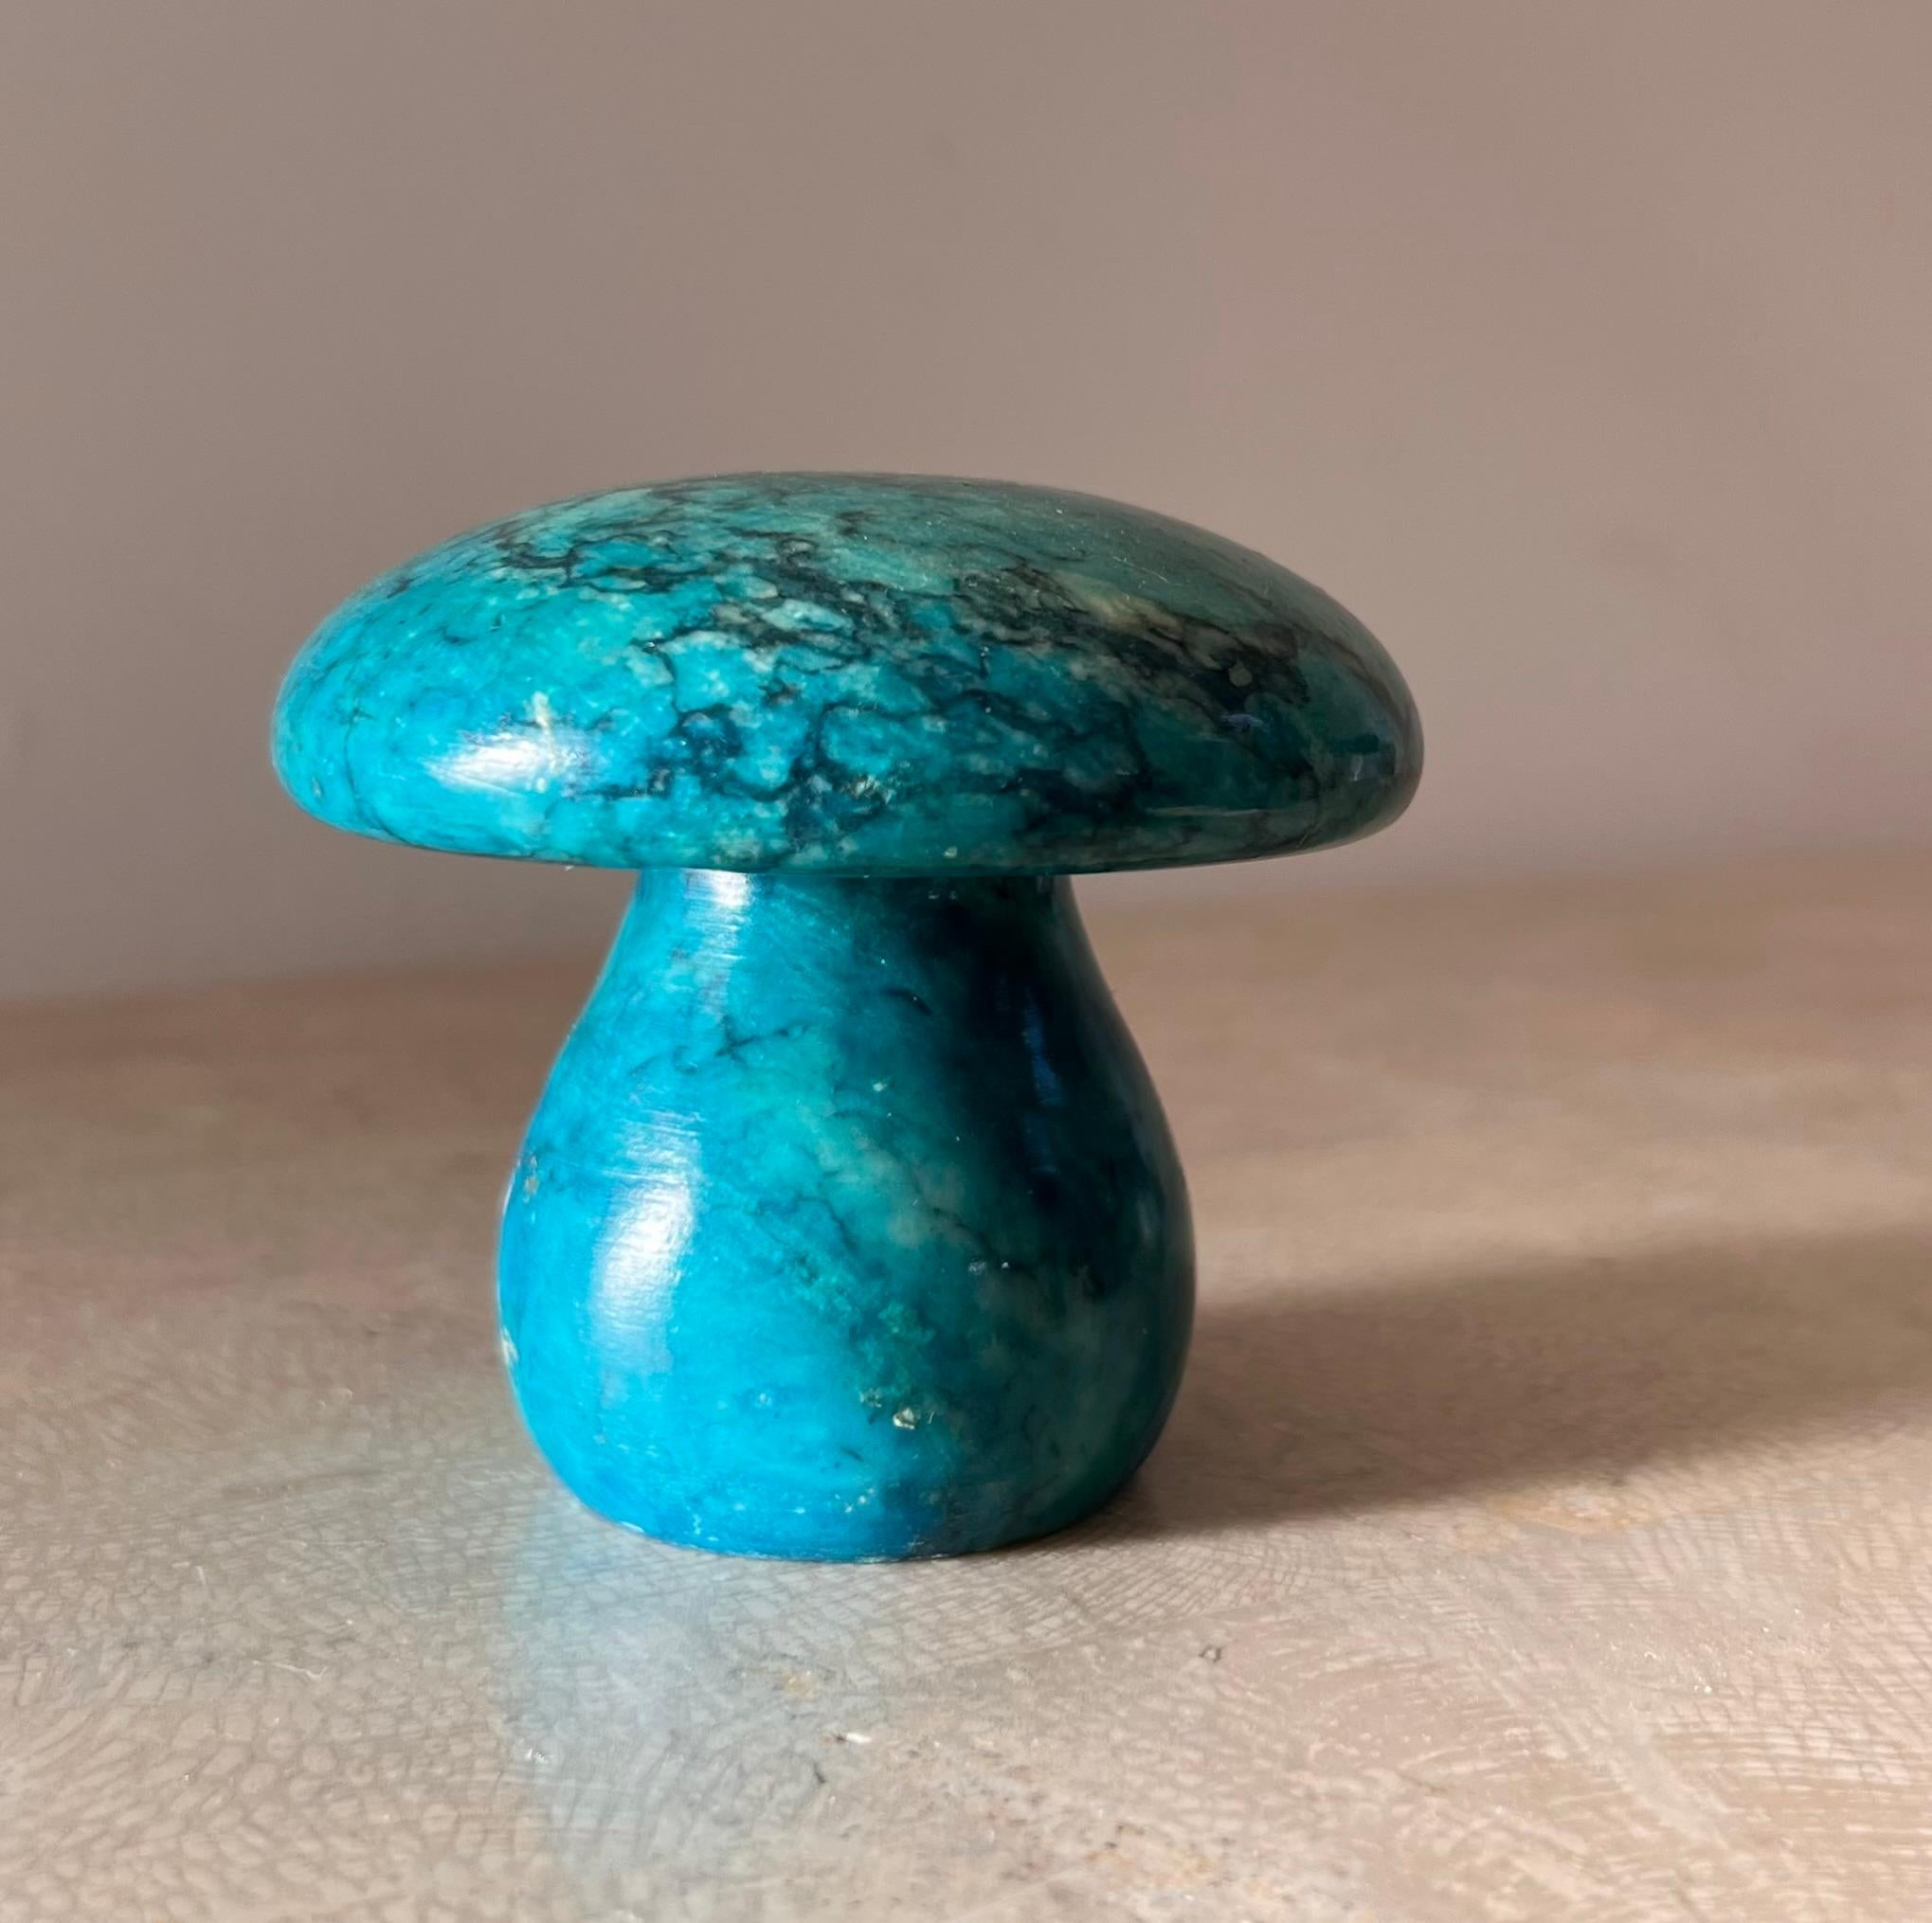 Hand-Carved Vintage Italian Blue Marble Mushroom Objet / Paperweight, 1960s